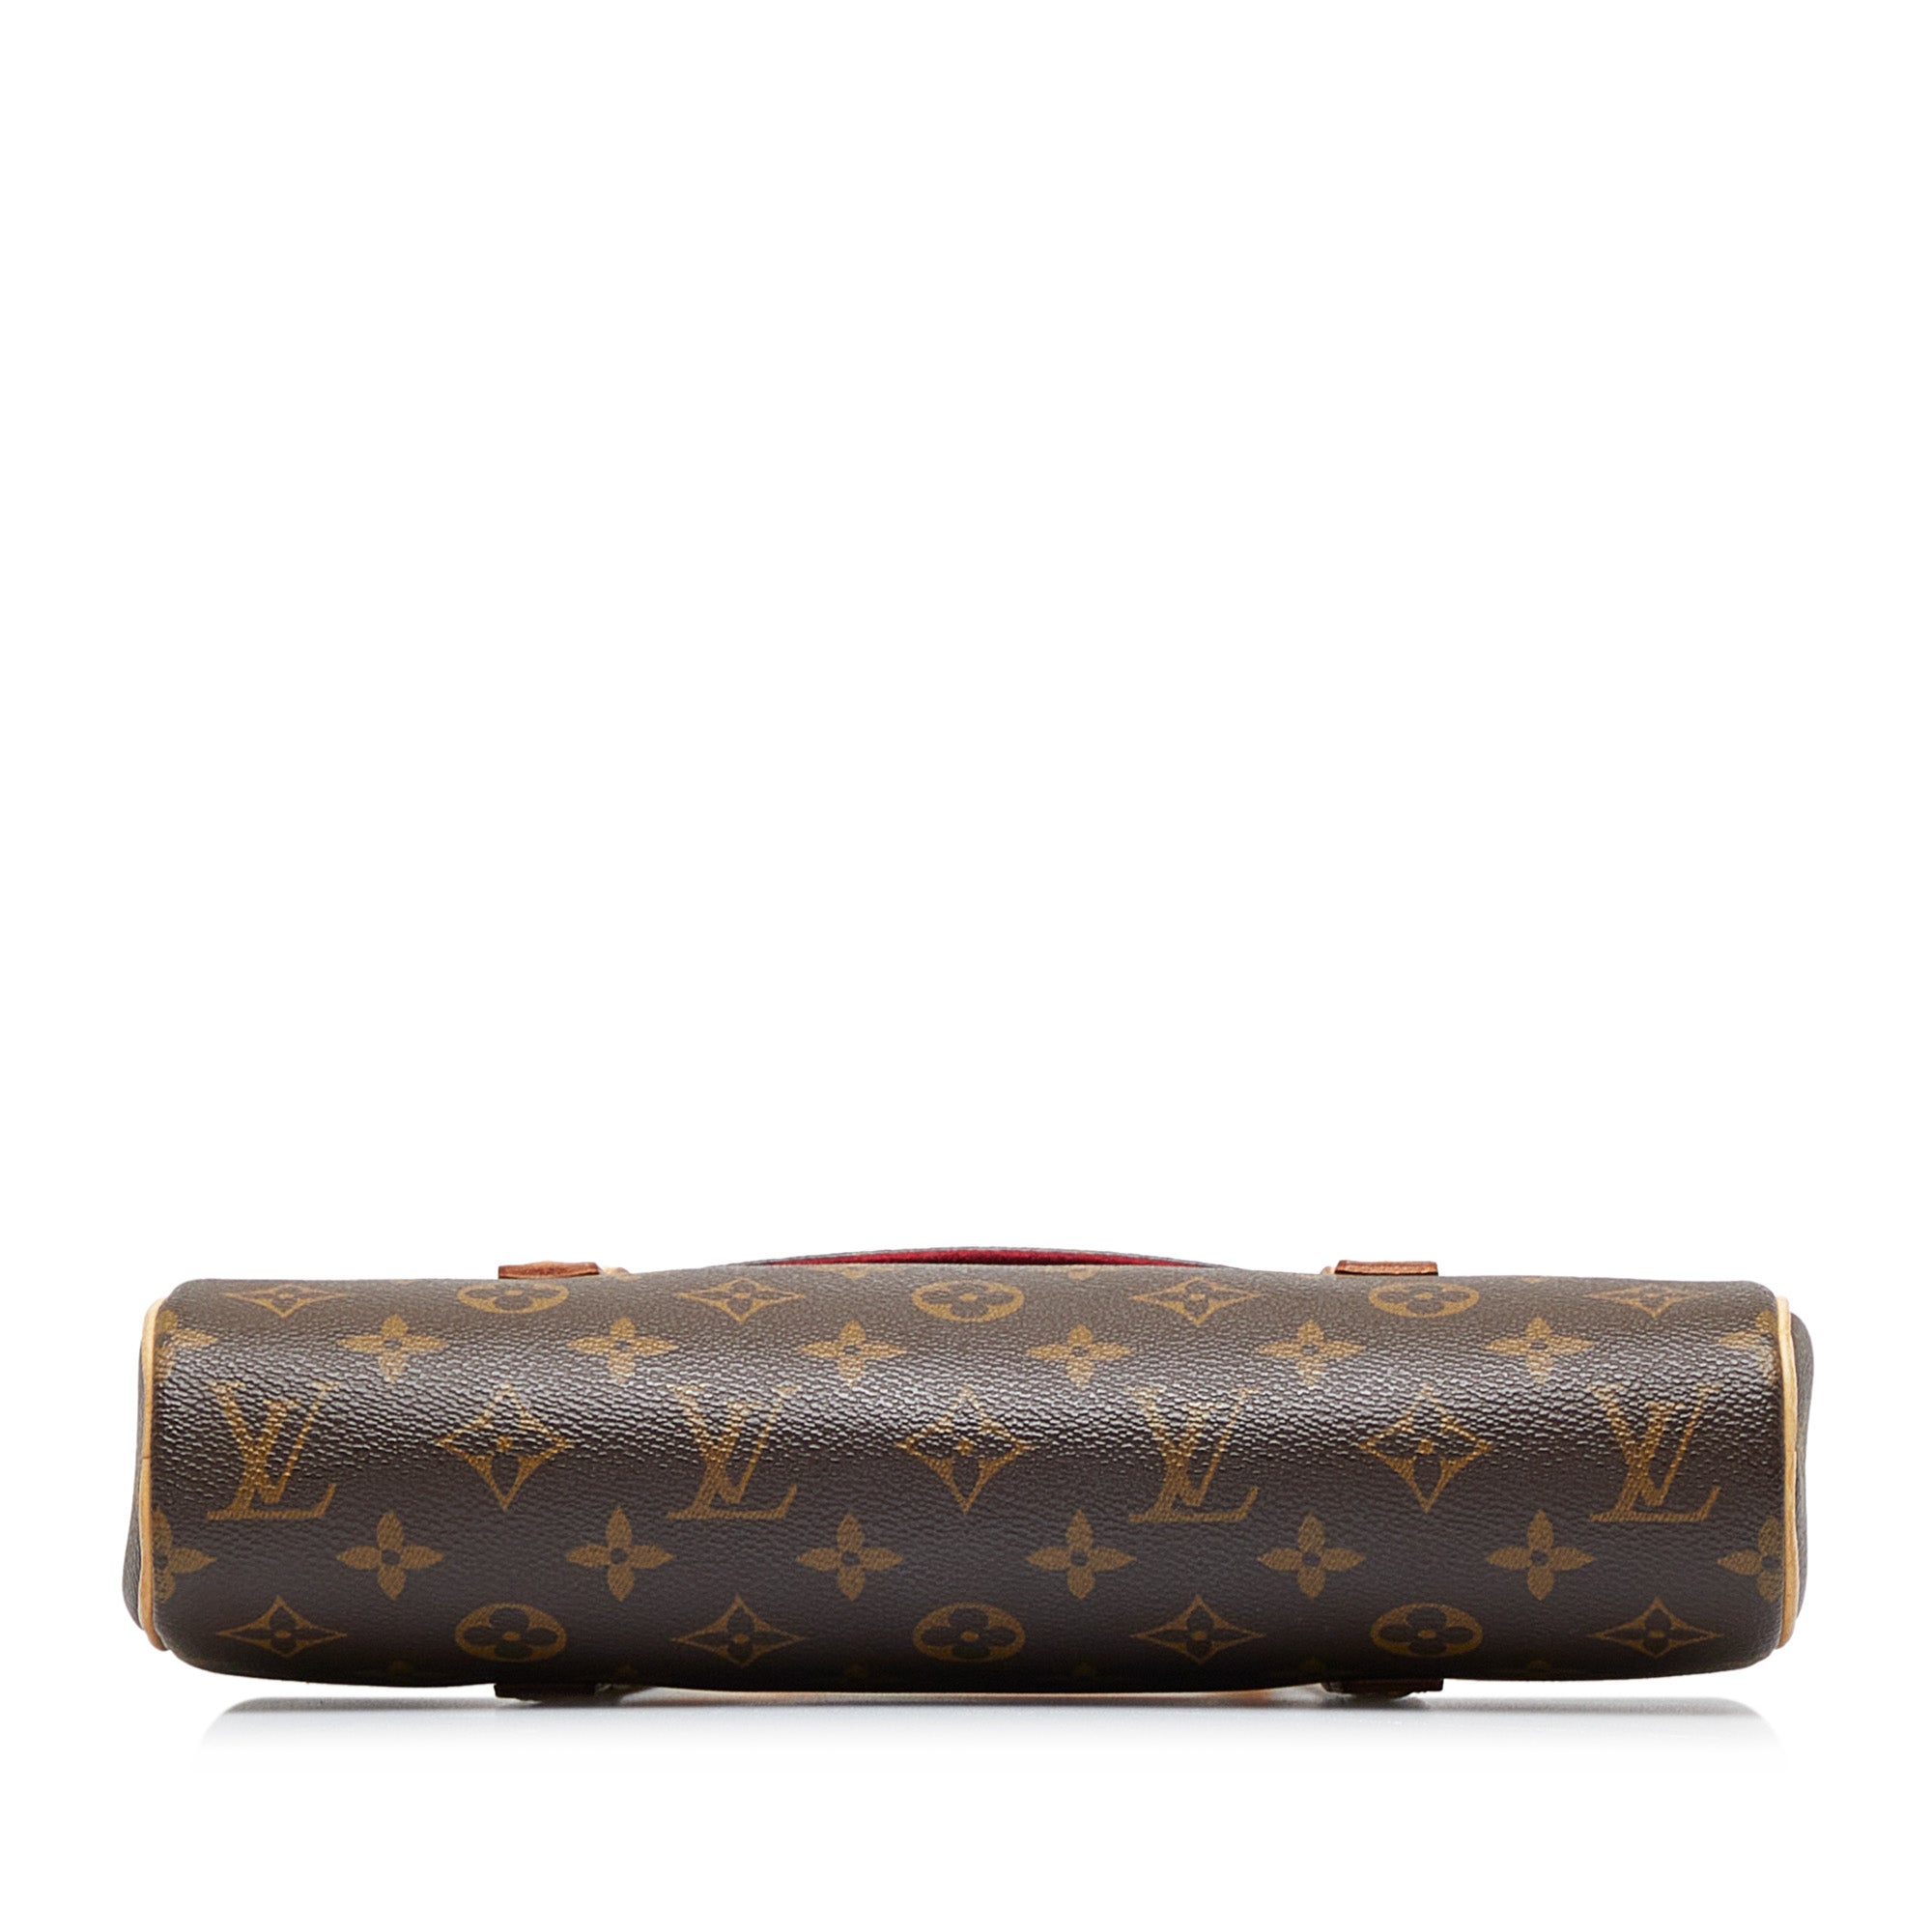 Buy Pre-Owned Authentic Luxury Louis Vuitton Monogram Canvas Sonatine  Handbag Online